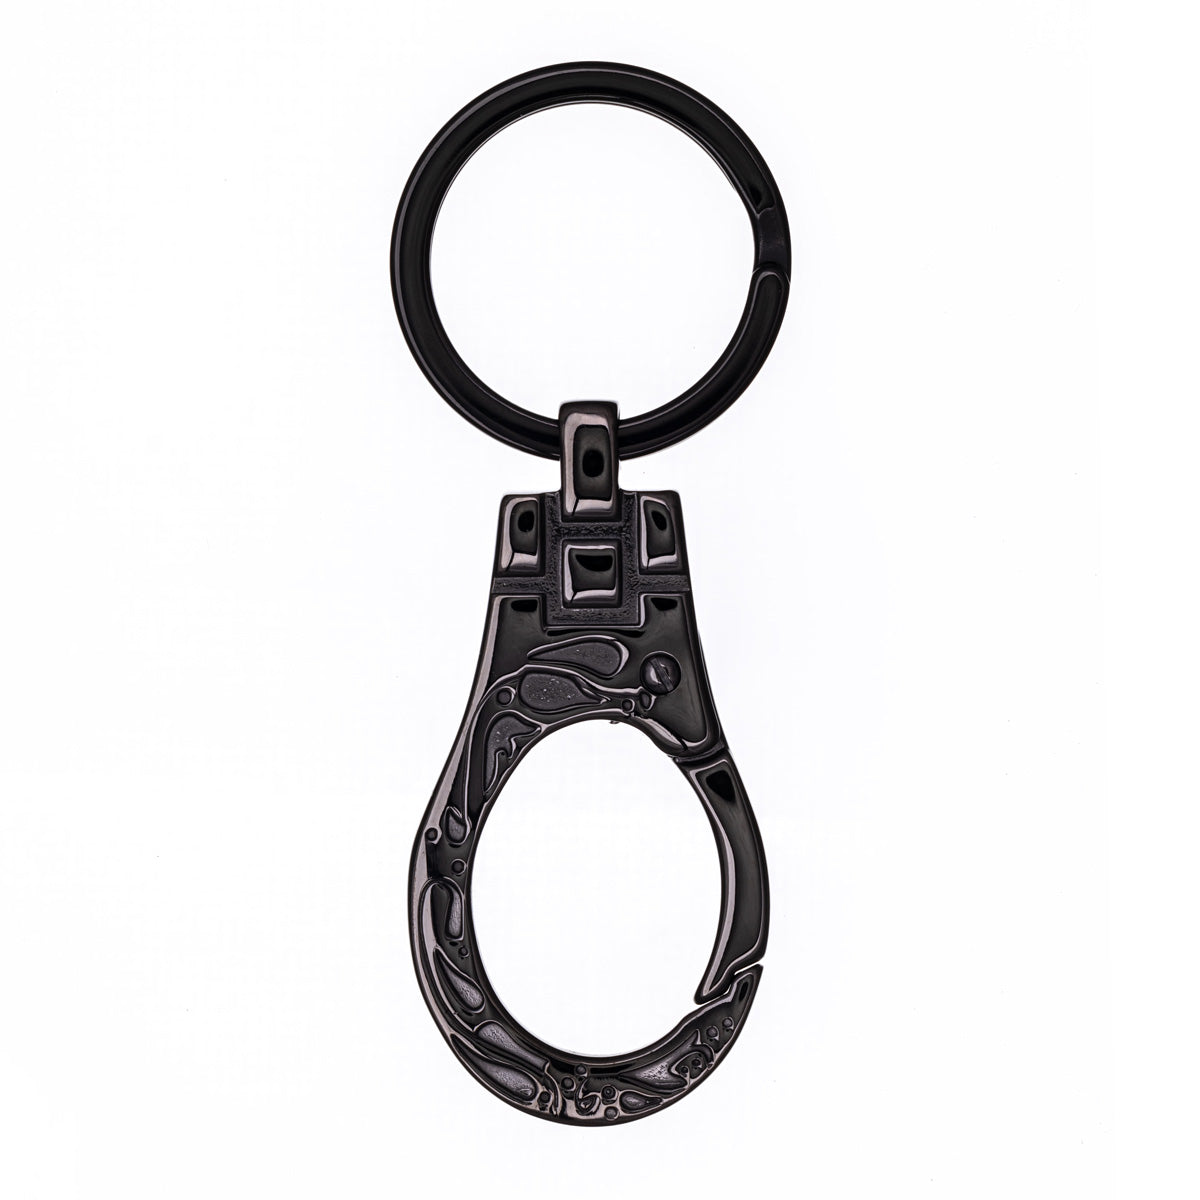 Patterned dark steel key ring with quick lock carabiner (Steel 316L)